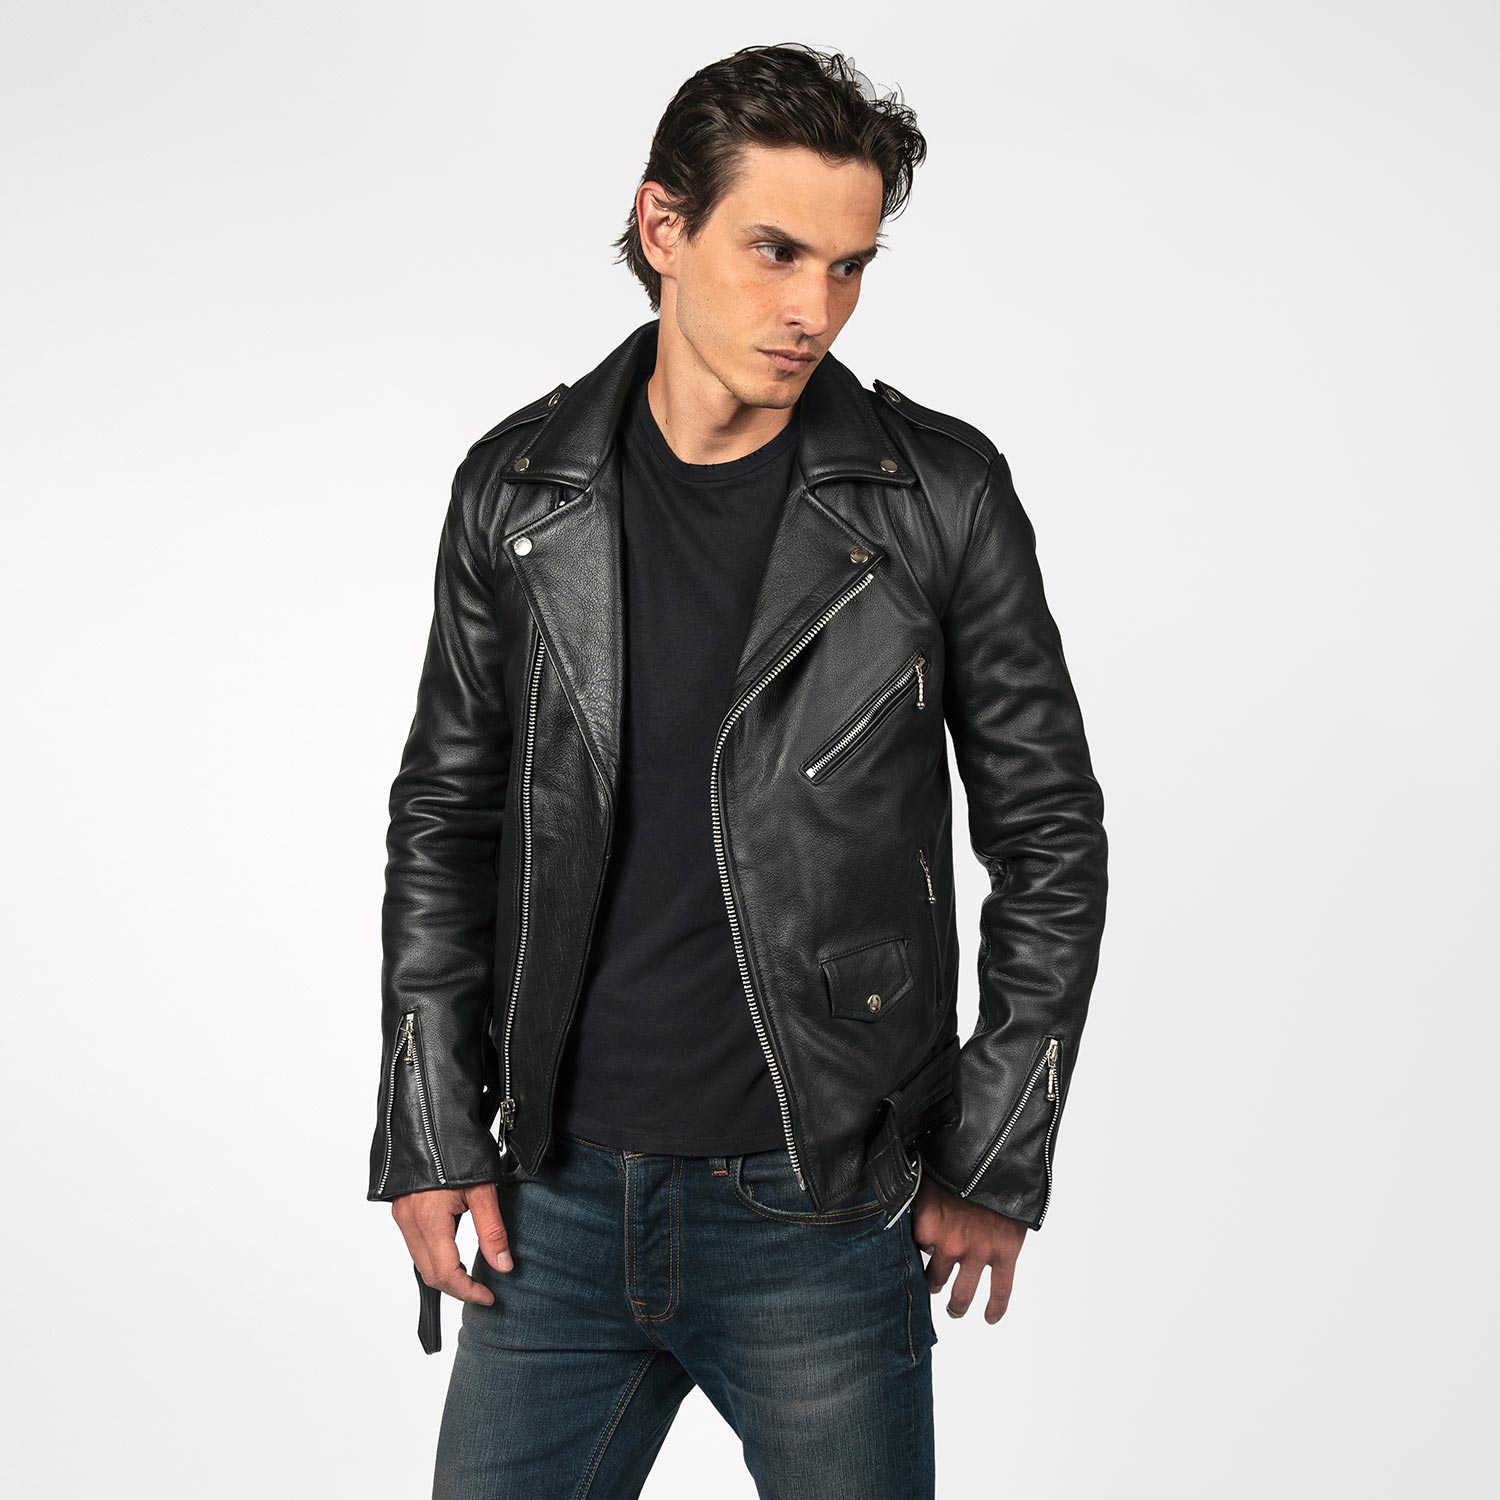 Tall Man Leather Jackets - Cairoamani.com